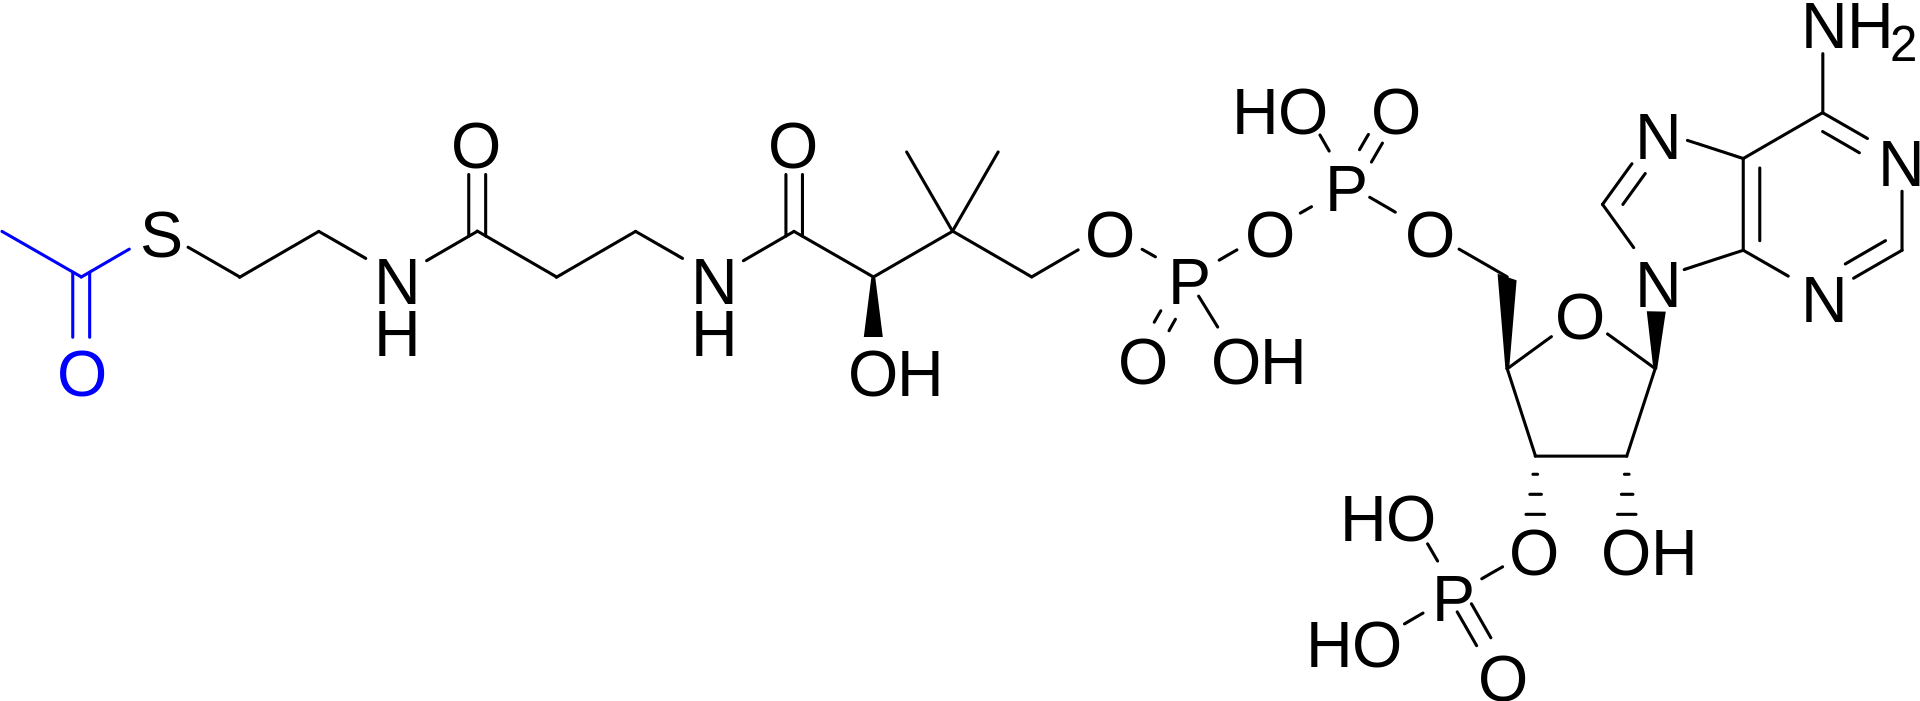 Molecular structure of acetyl-CoA